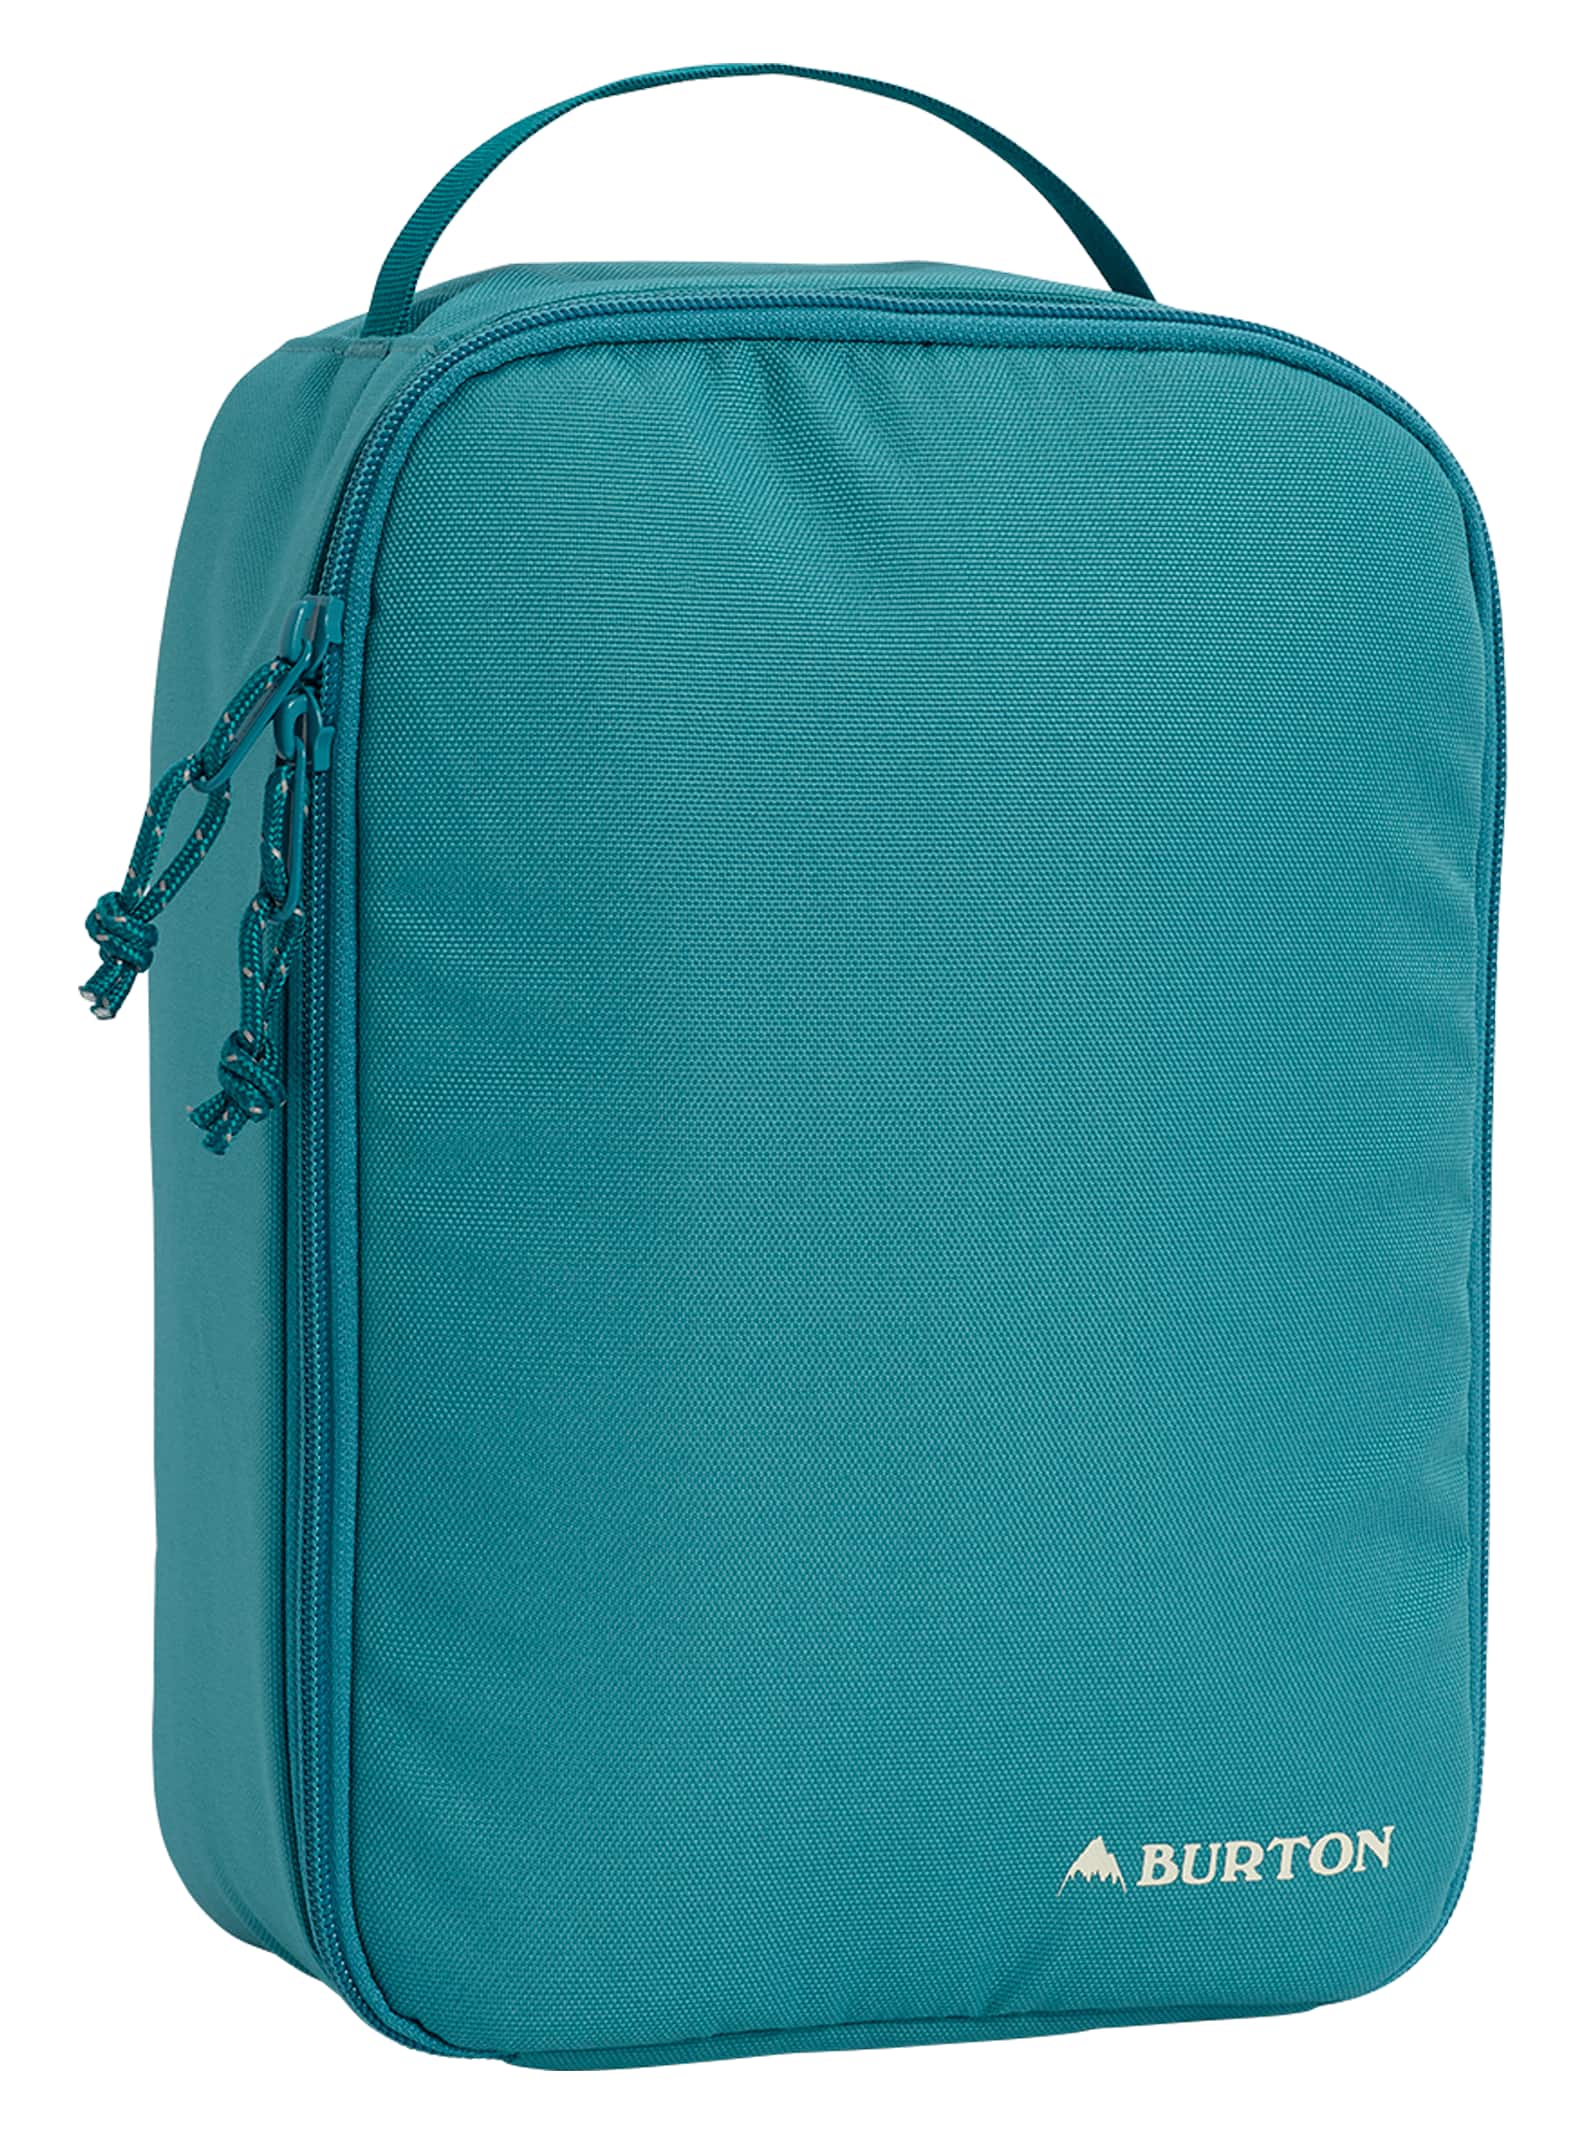 Burton / Lunch-N-Box 8L Cooler Bag